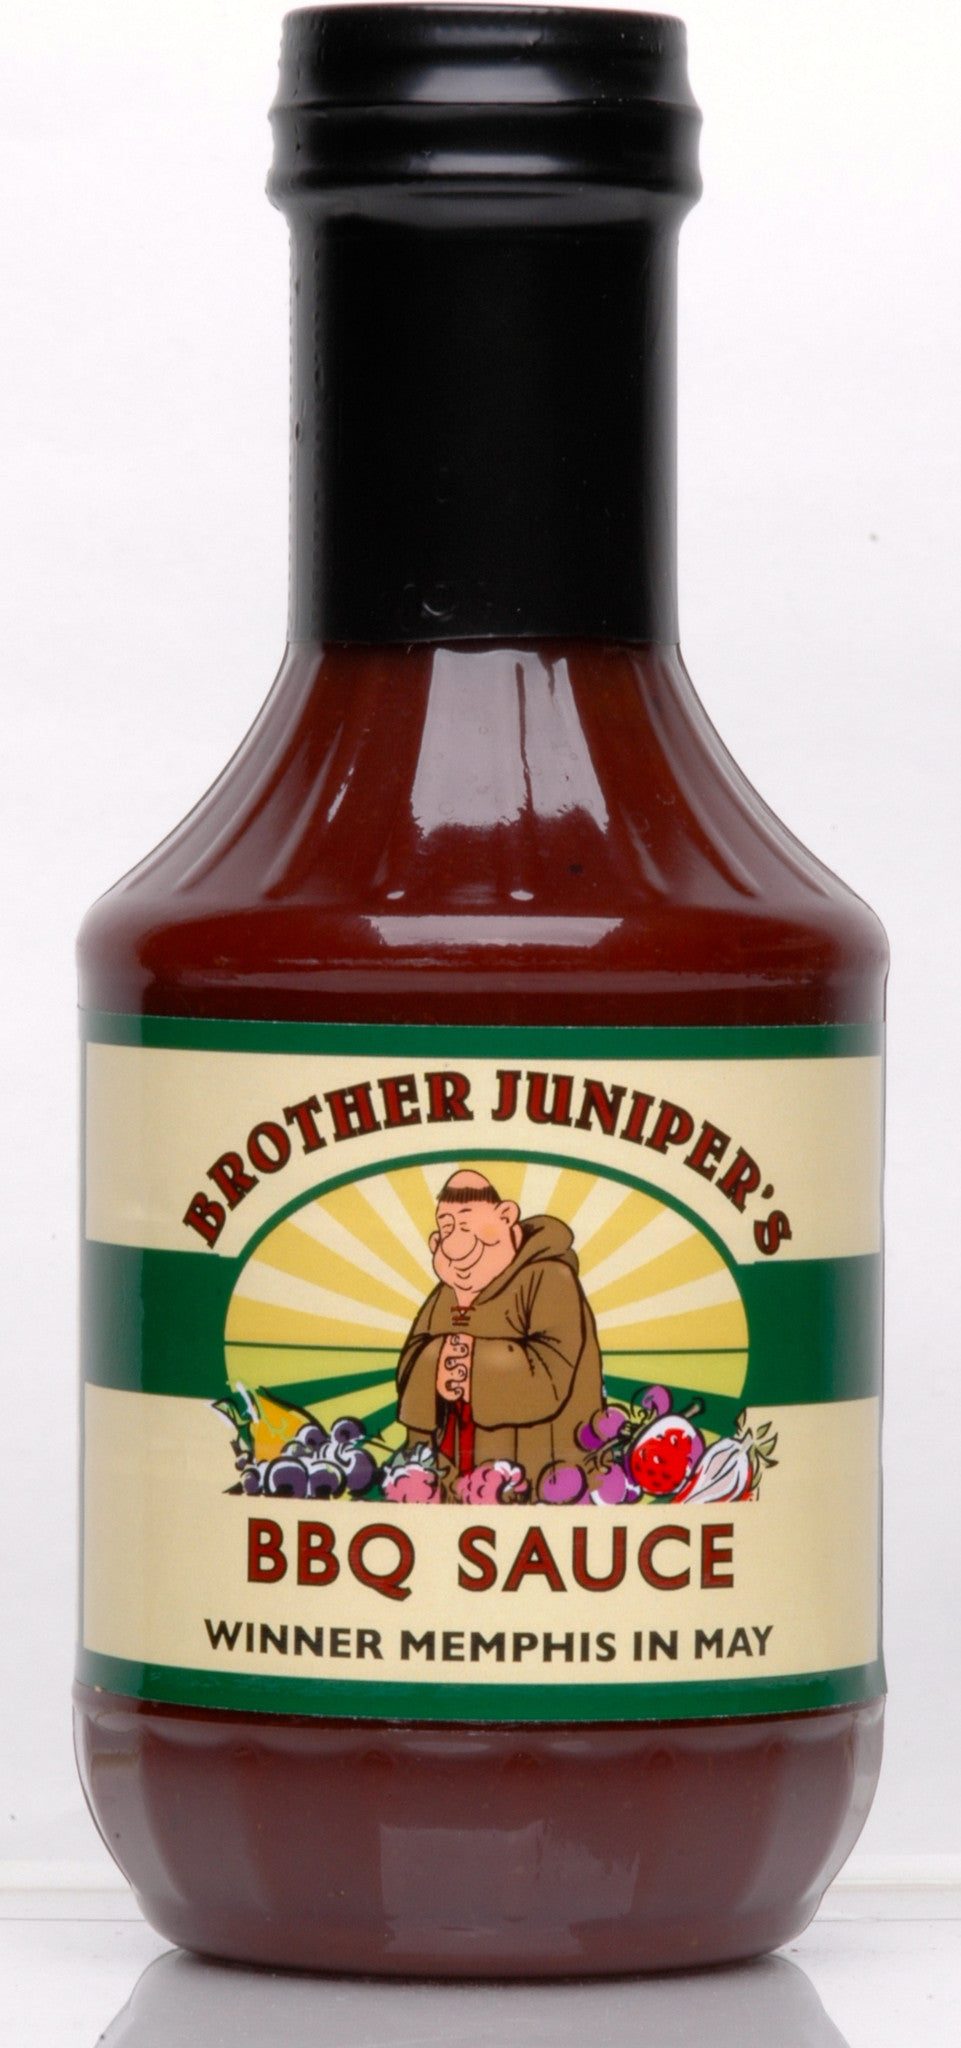 Brother Juniper's BBQ Sauce